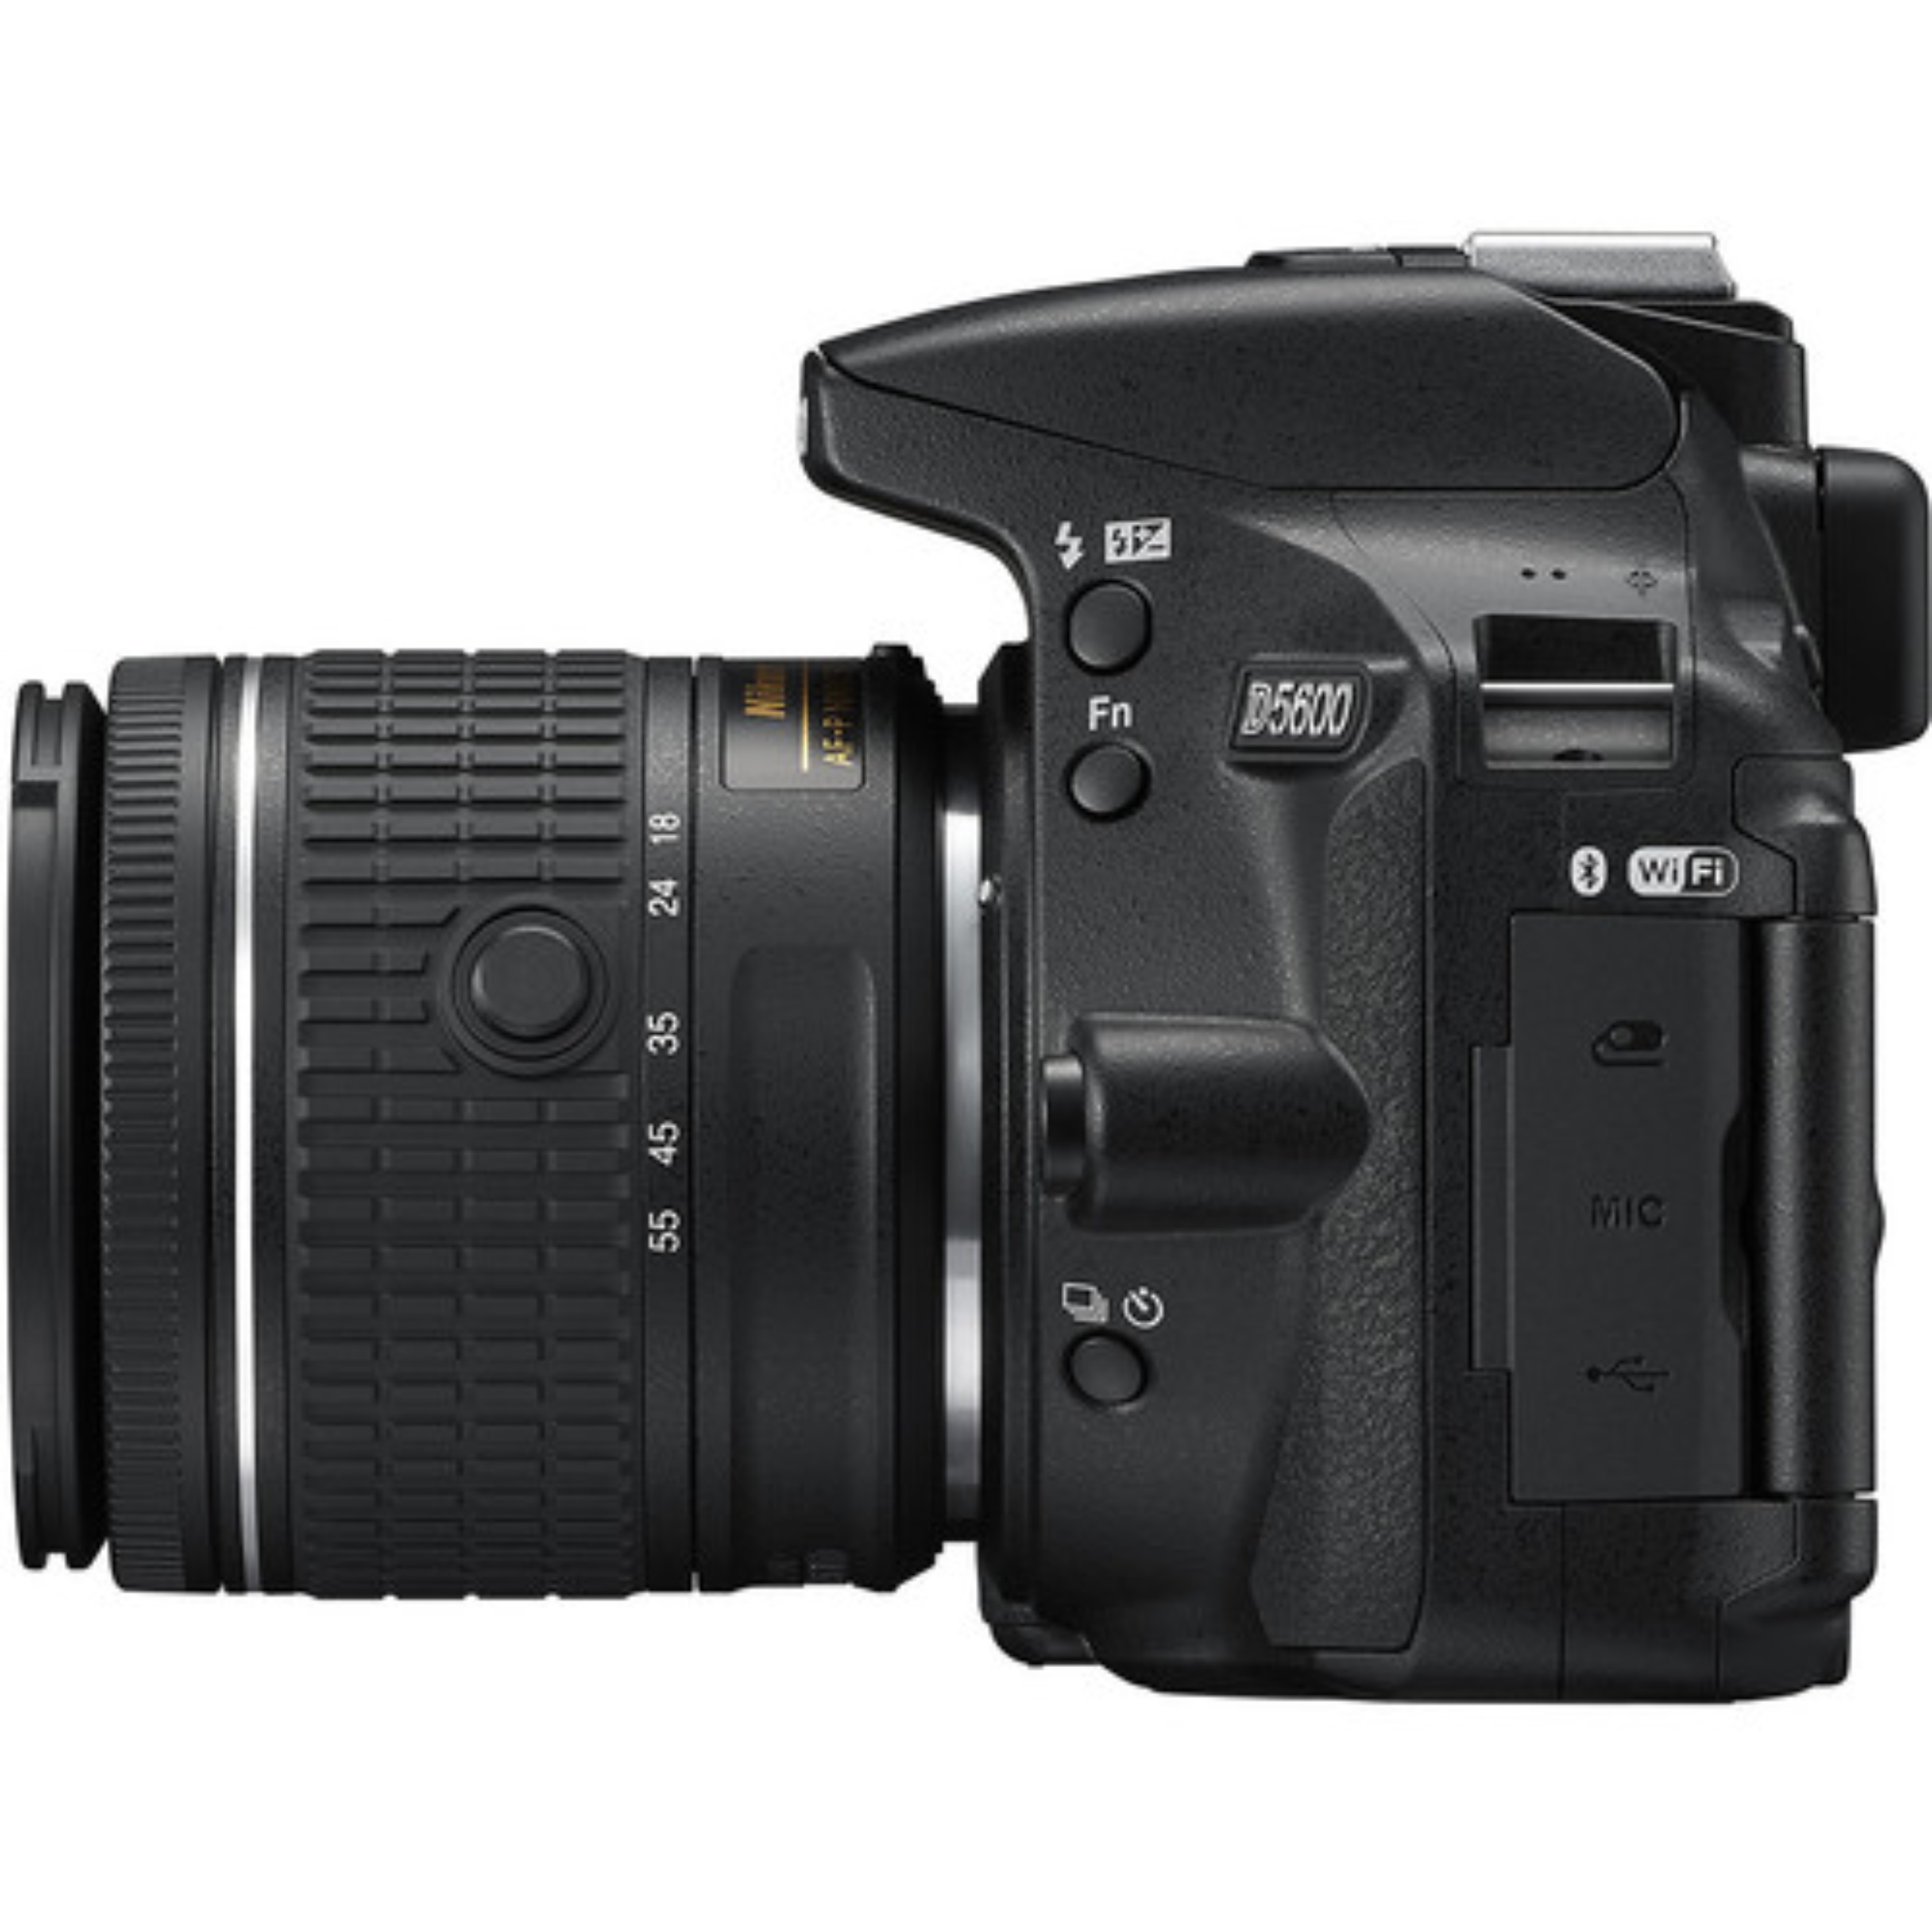 Nikon D5600 DSLR 24.2MP Camera with 18-55mm Lens - image 2 of 4